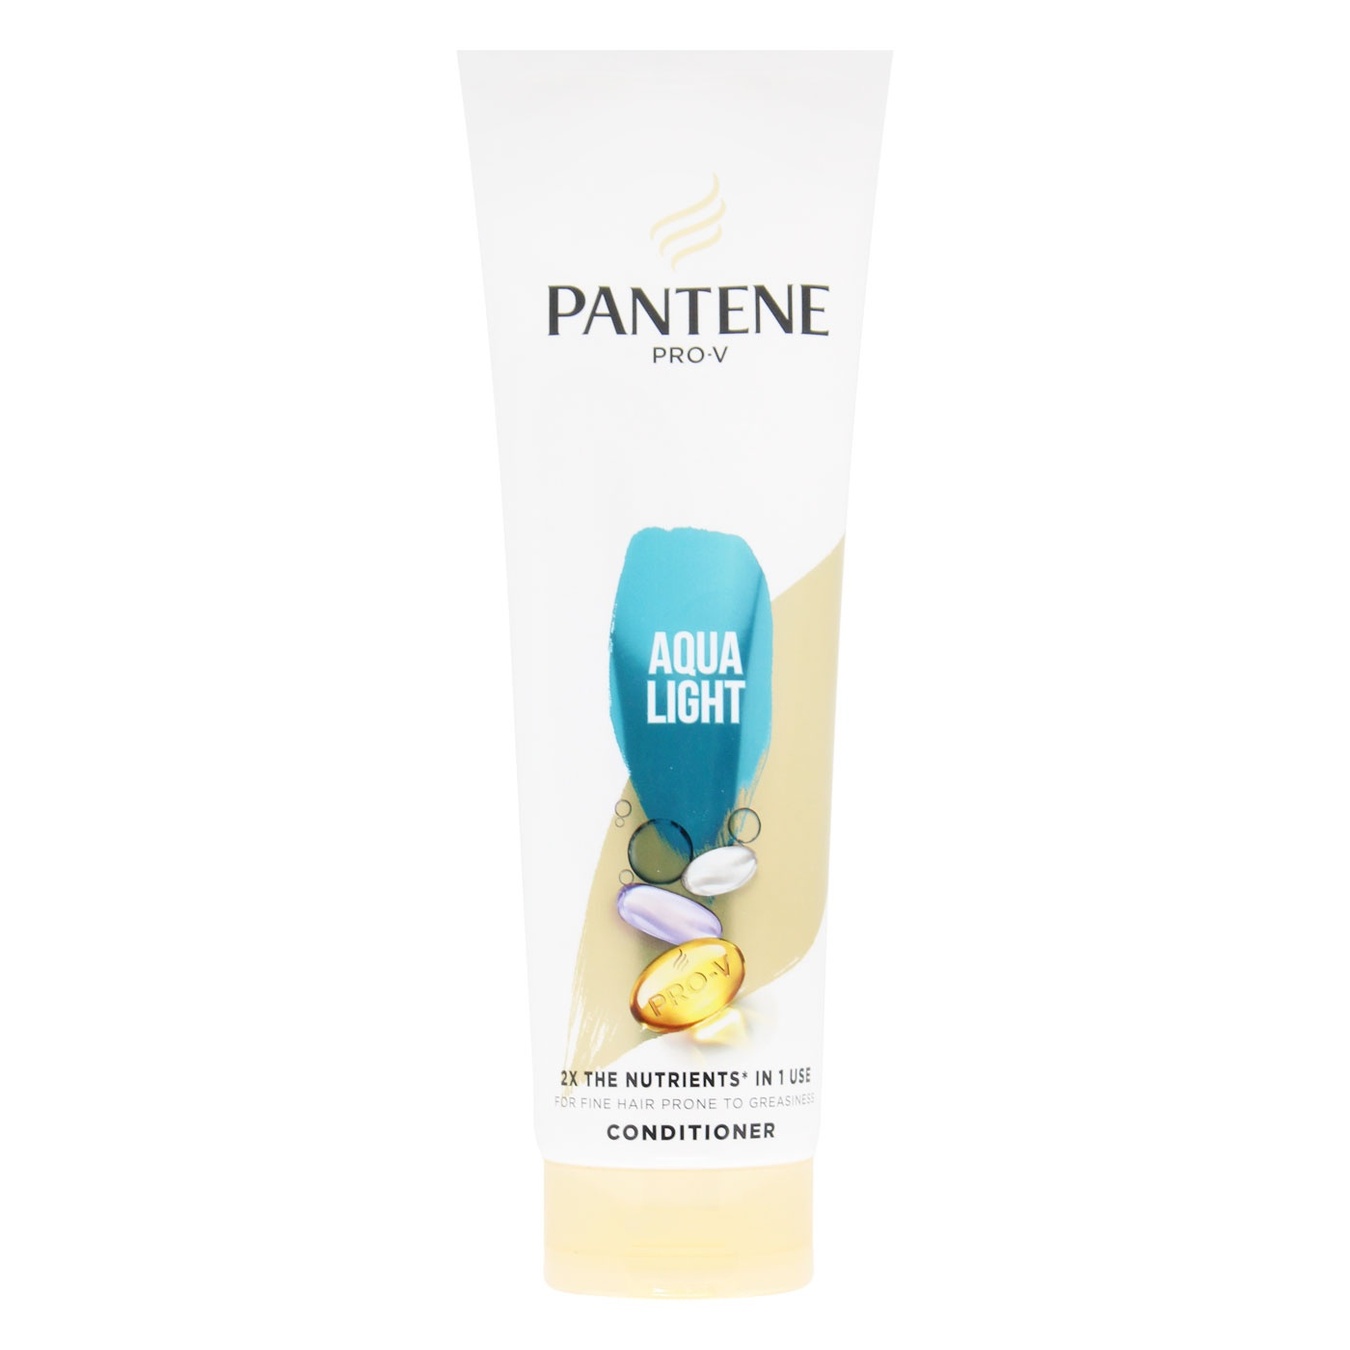 Pantene Aqua Light Balm 275 ml